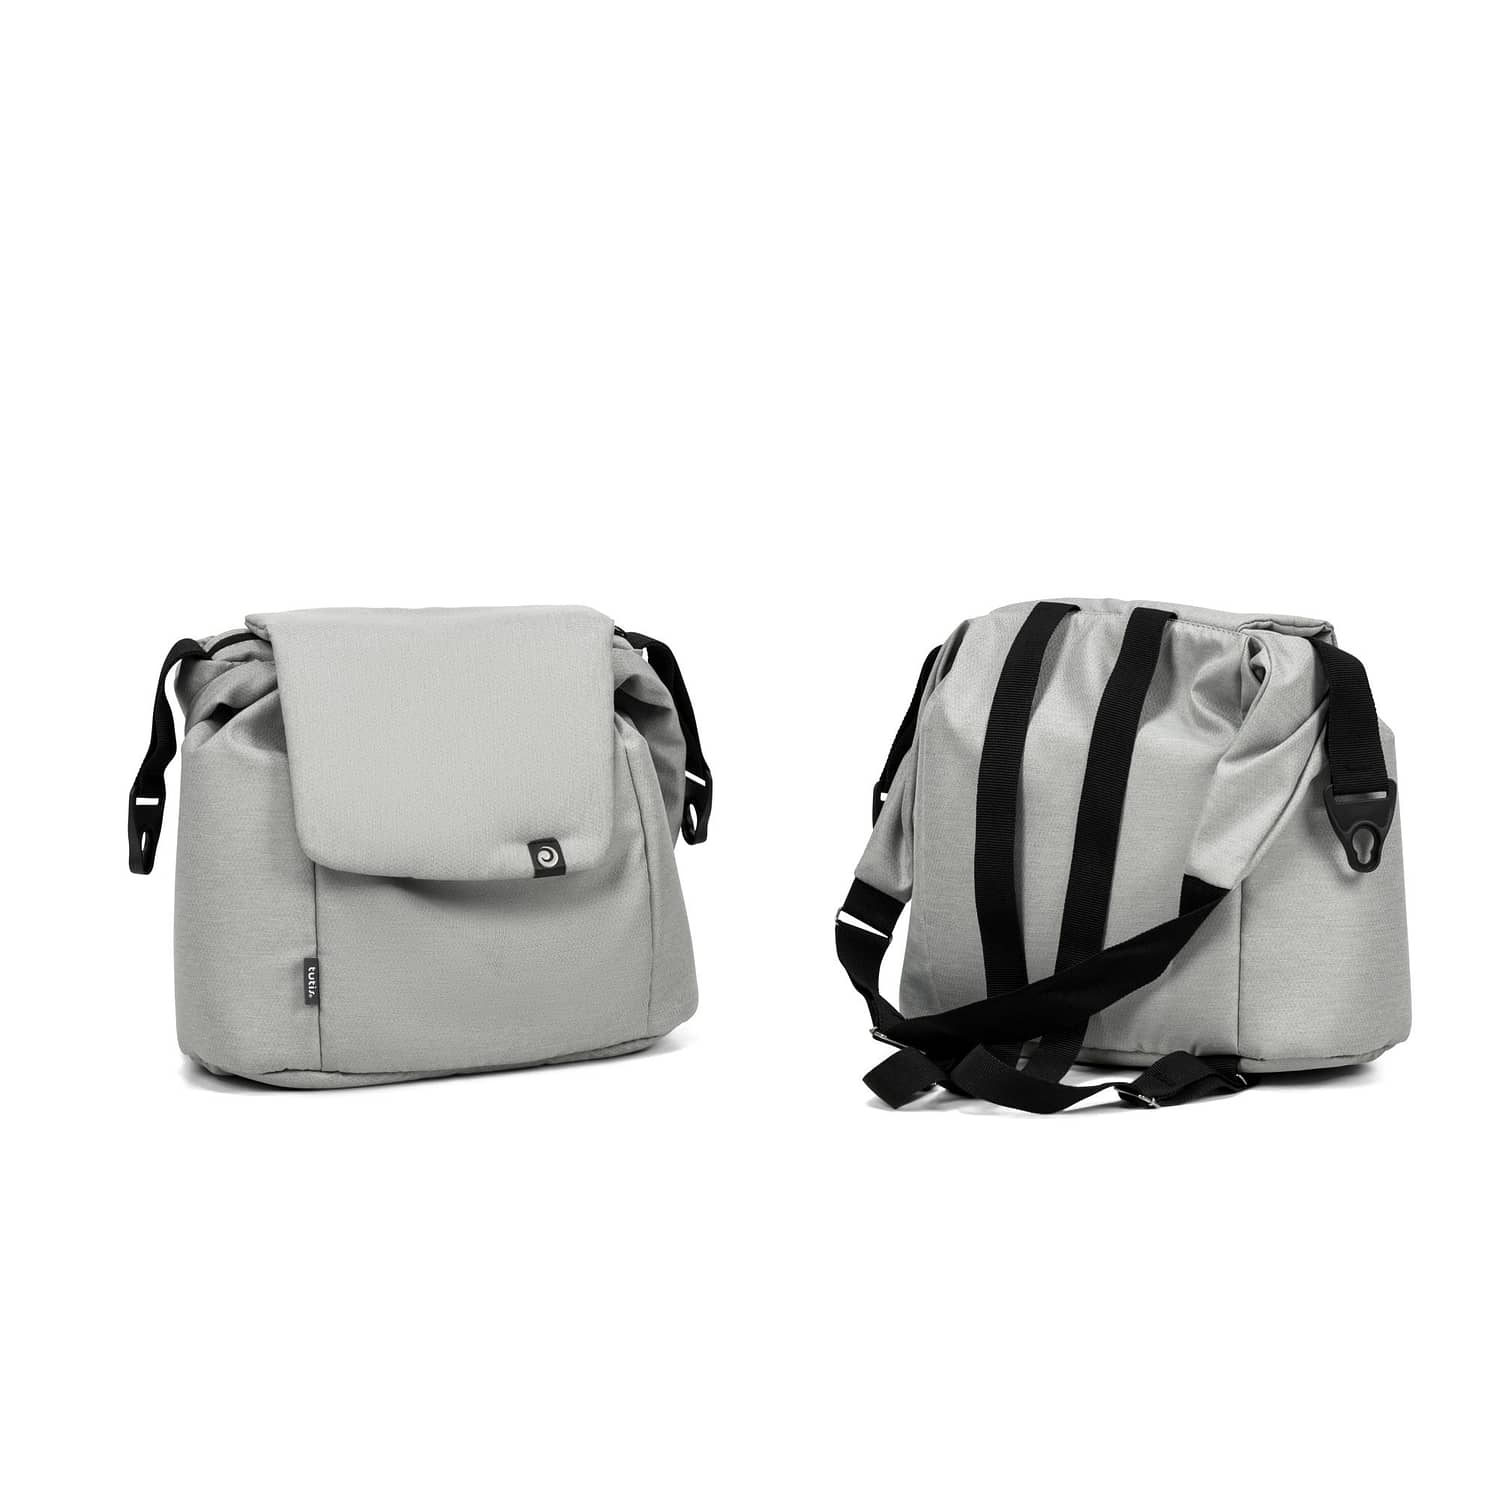 Tutis Mio Plus_242 Pearl_bag-backpack